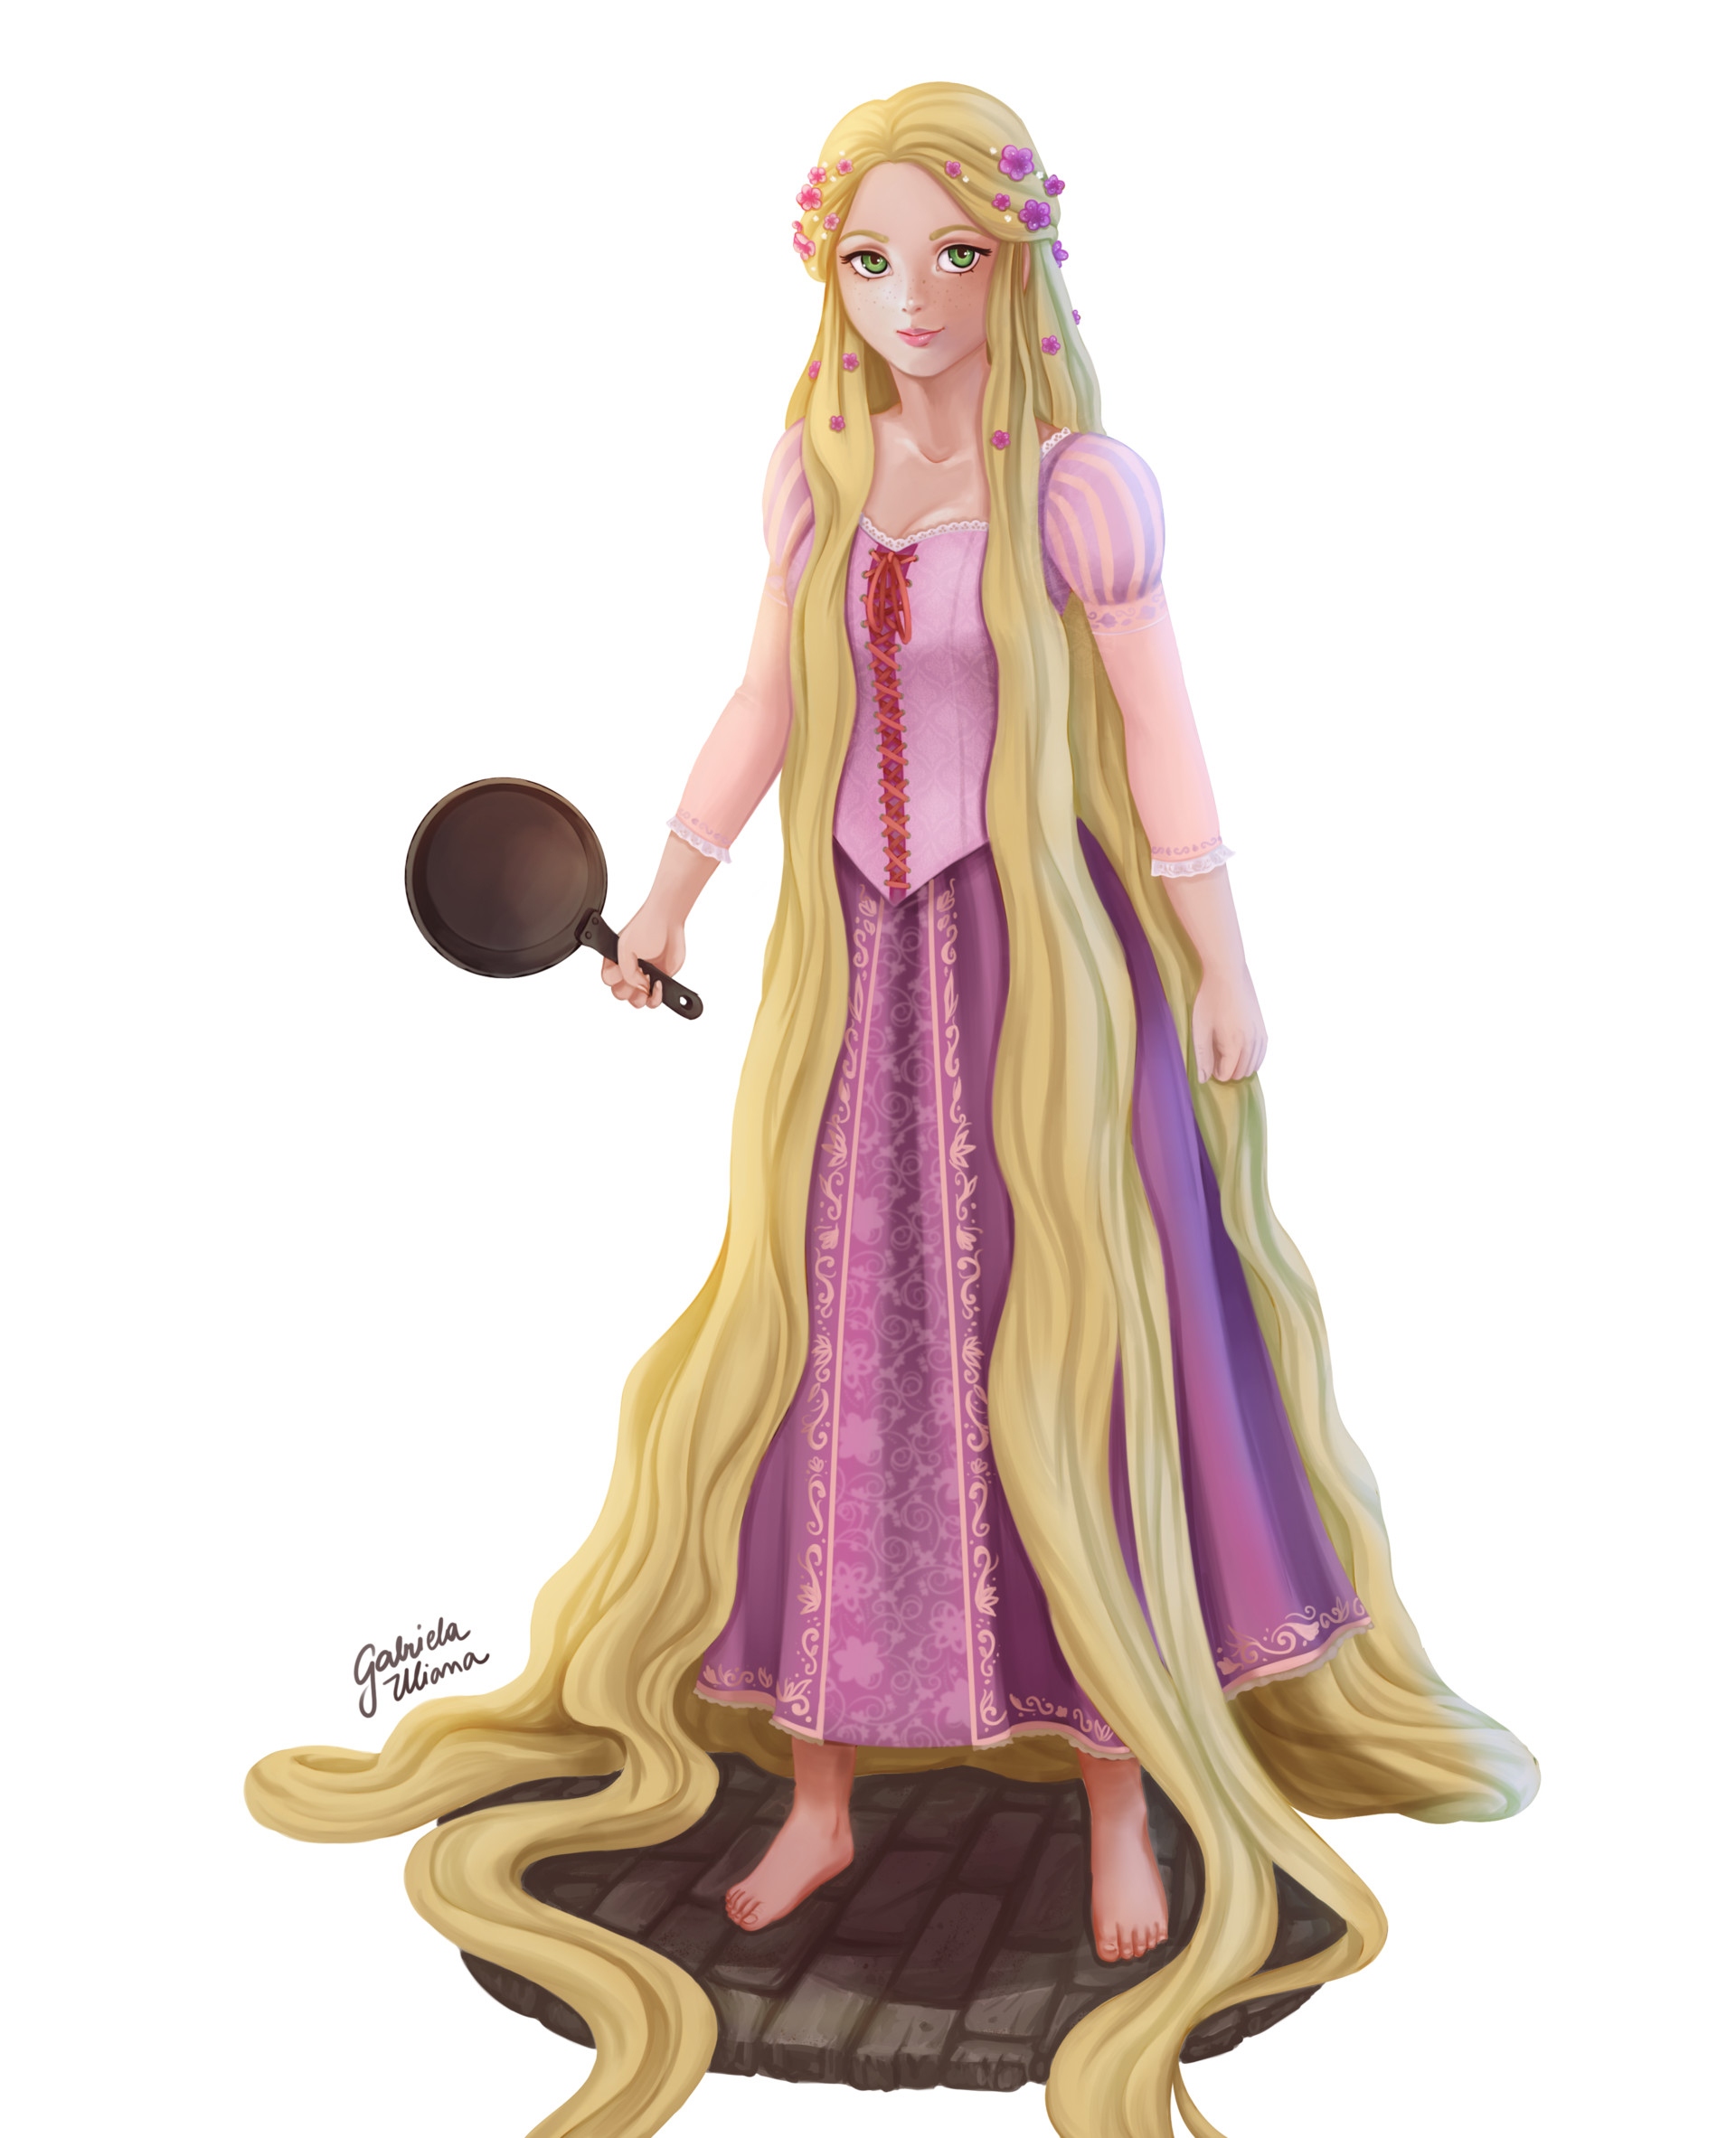 ArtStation - Rapunzel